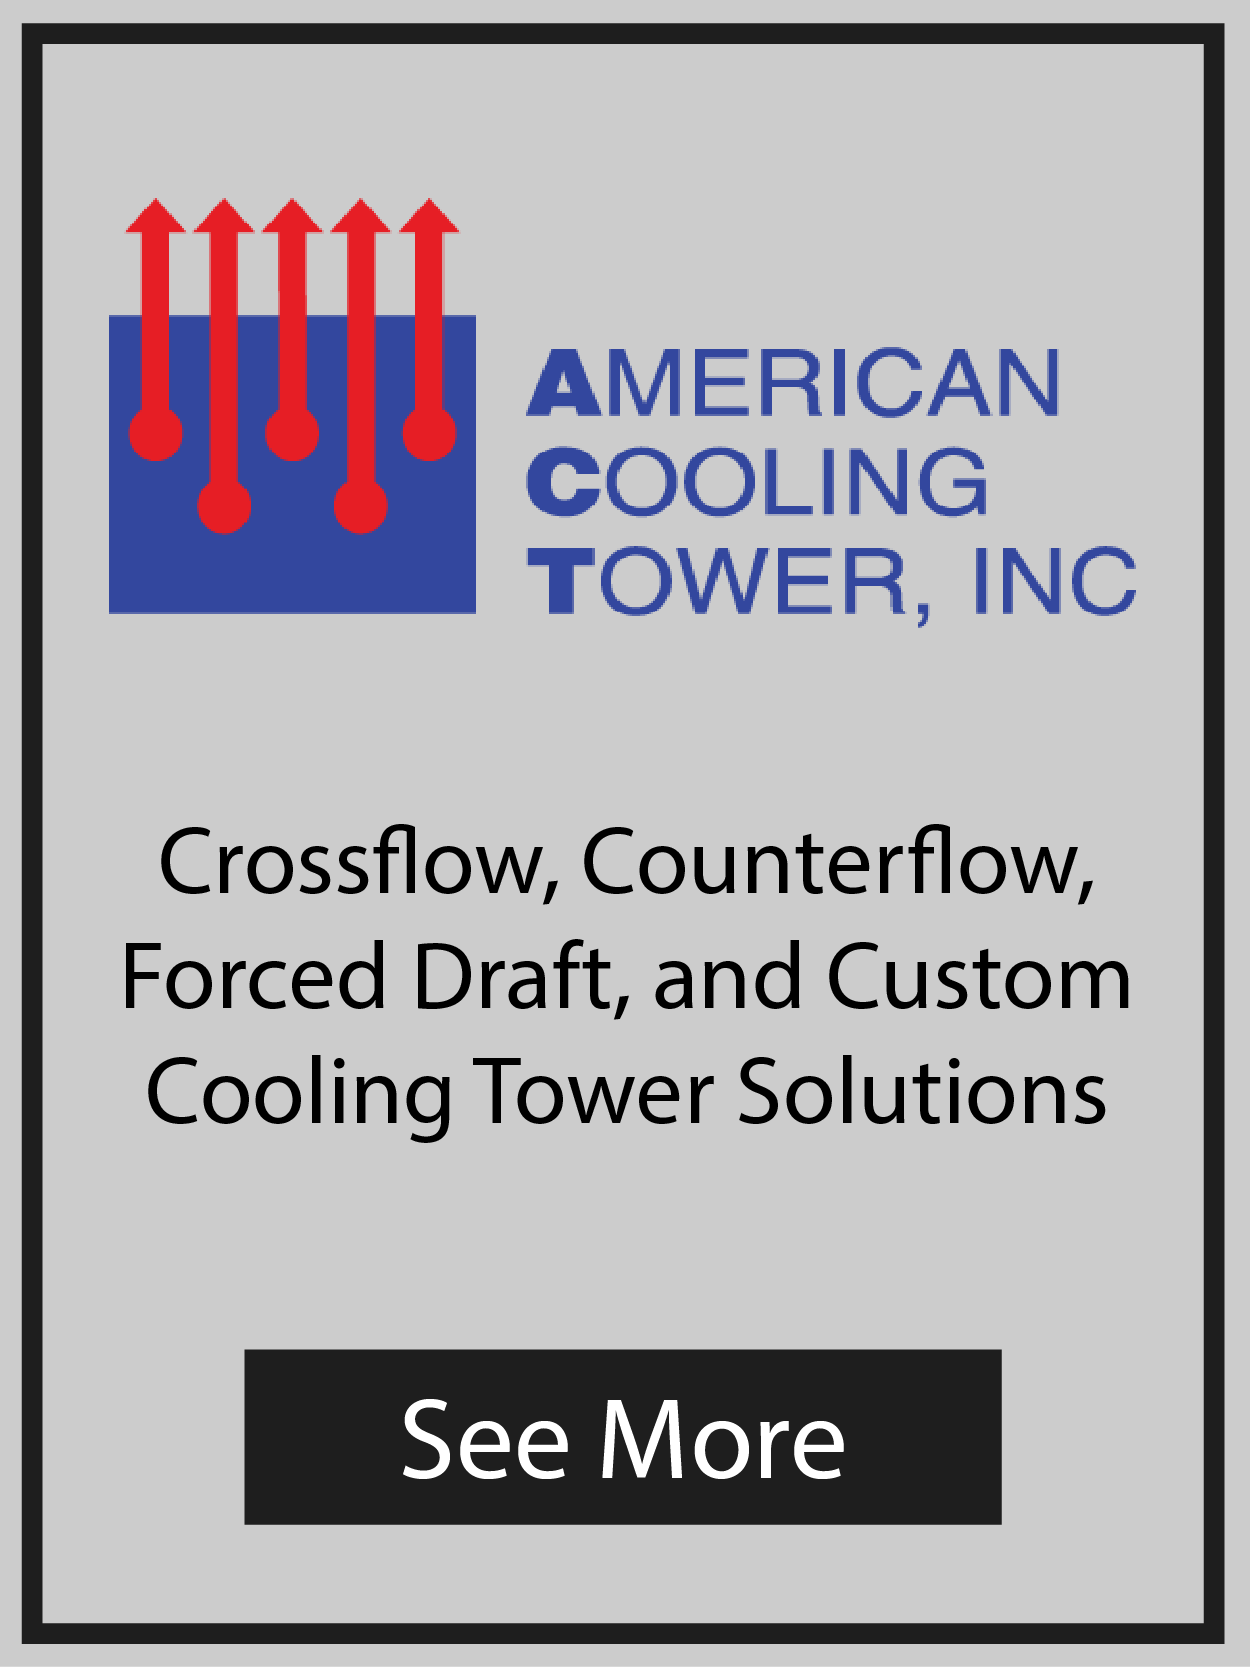 AmericanCoolingTower